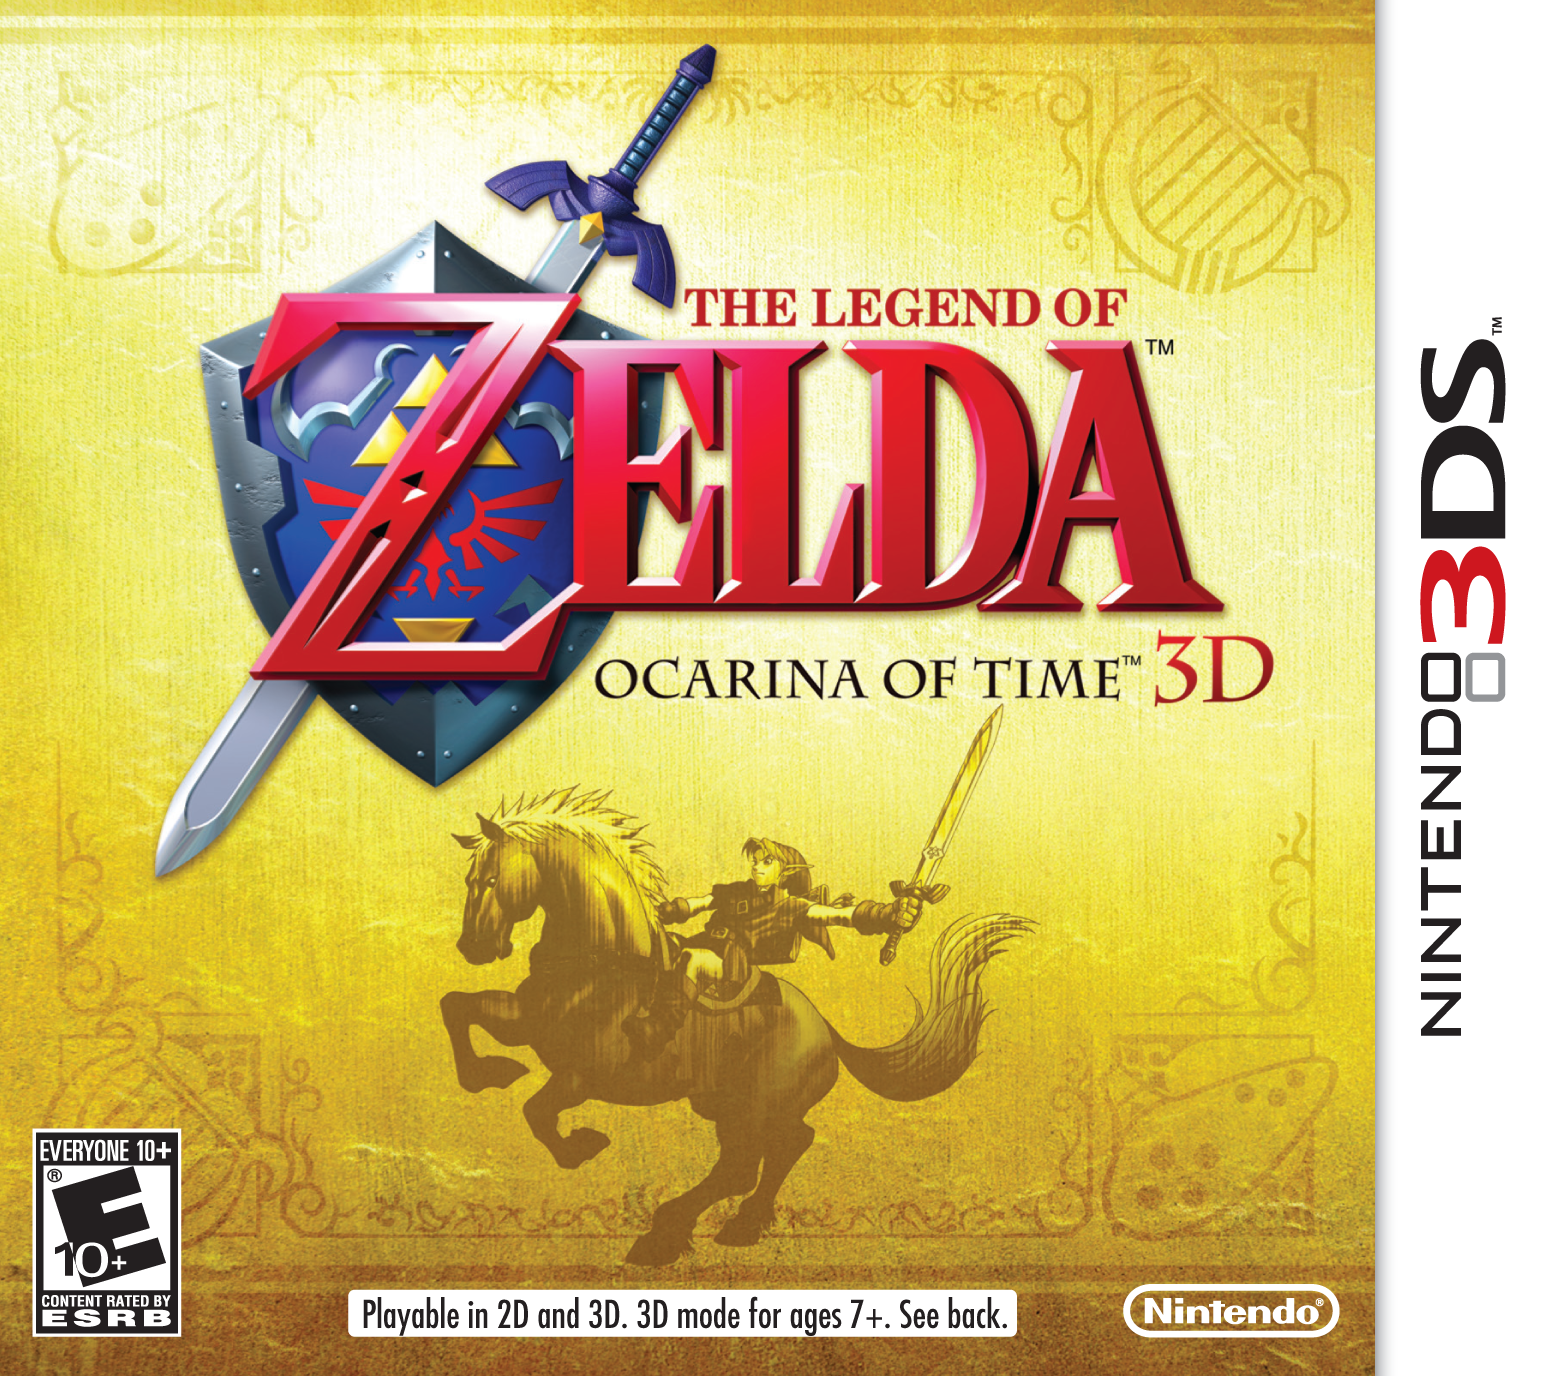 Nintendo 64 Zelda Ocarina of Time USA Box 